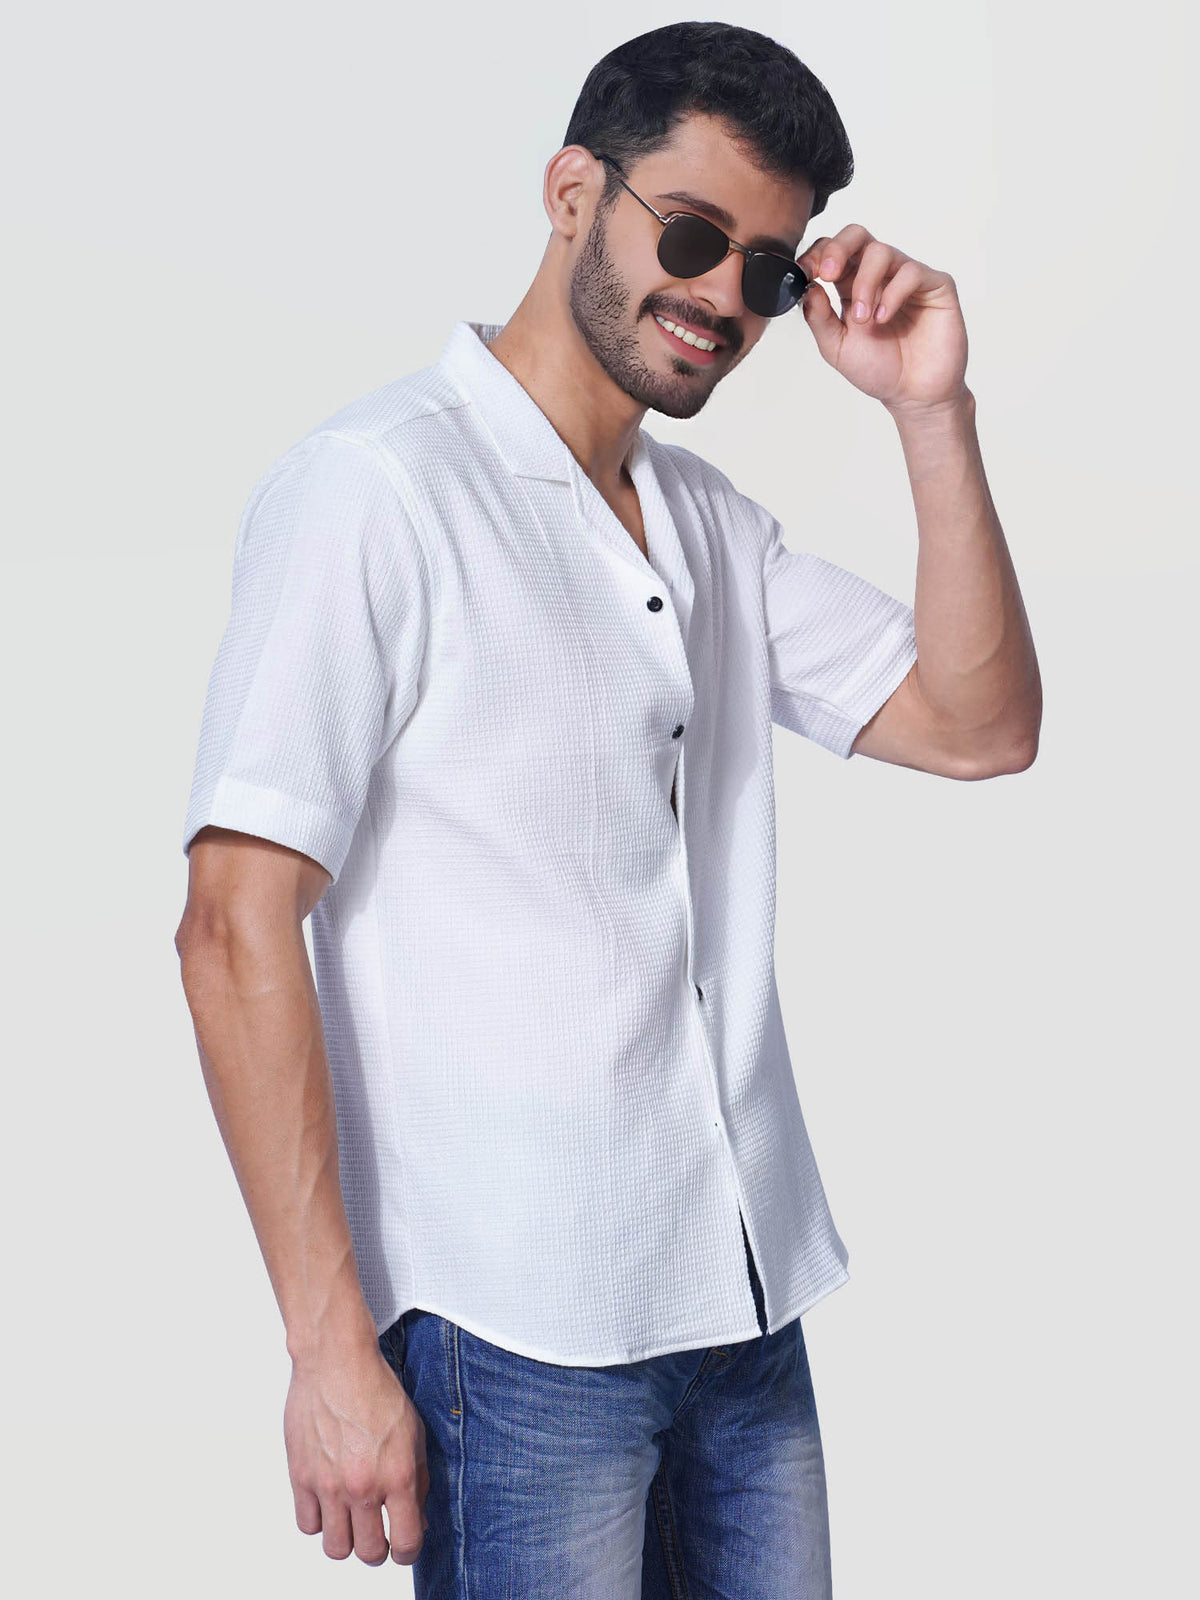 Self Designed White Shirt